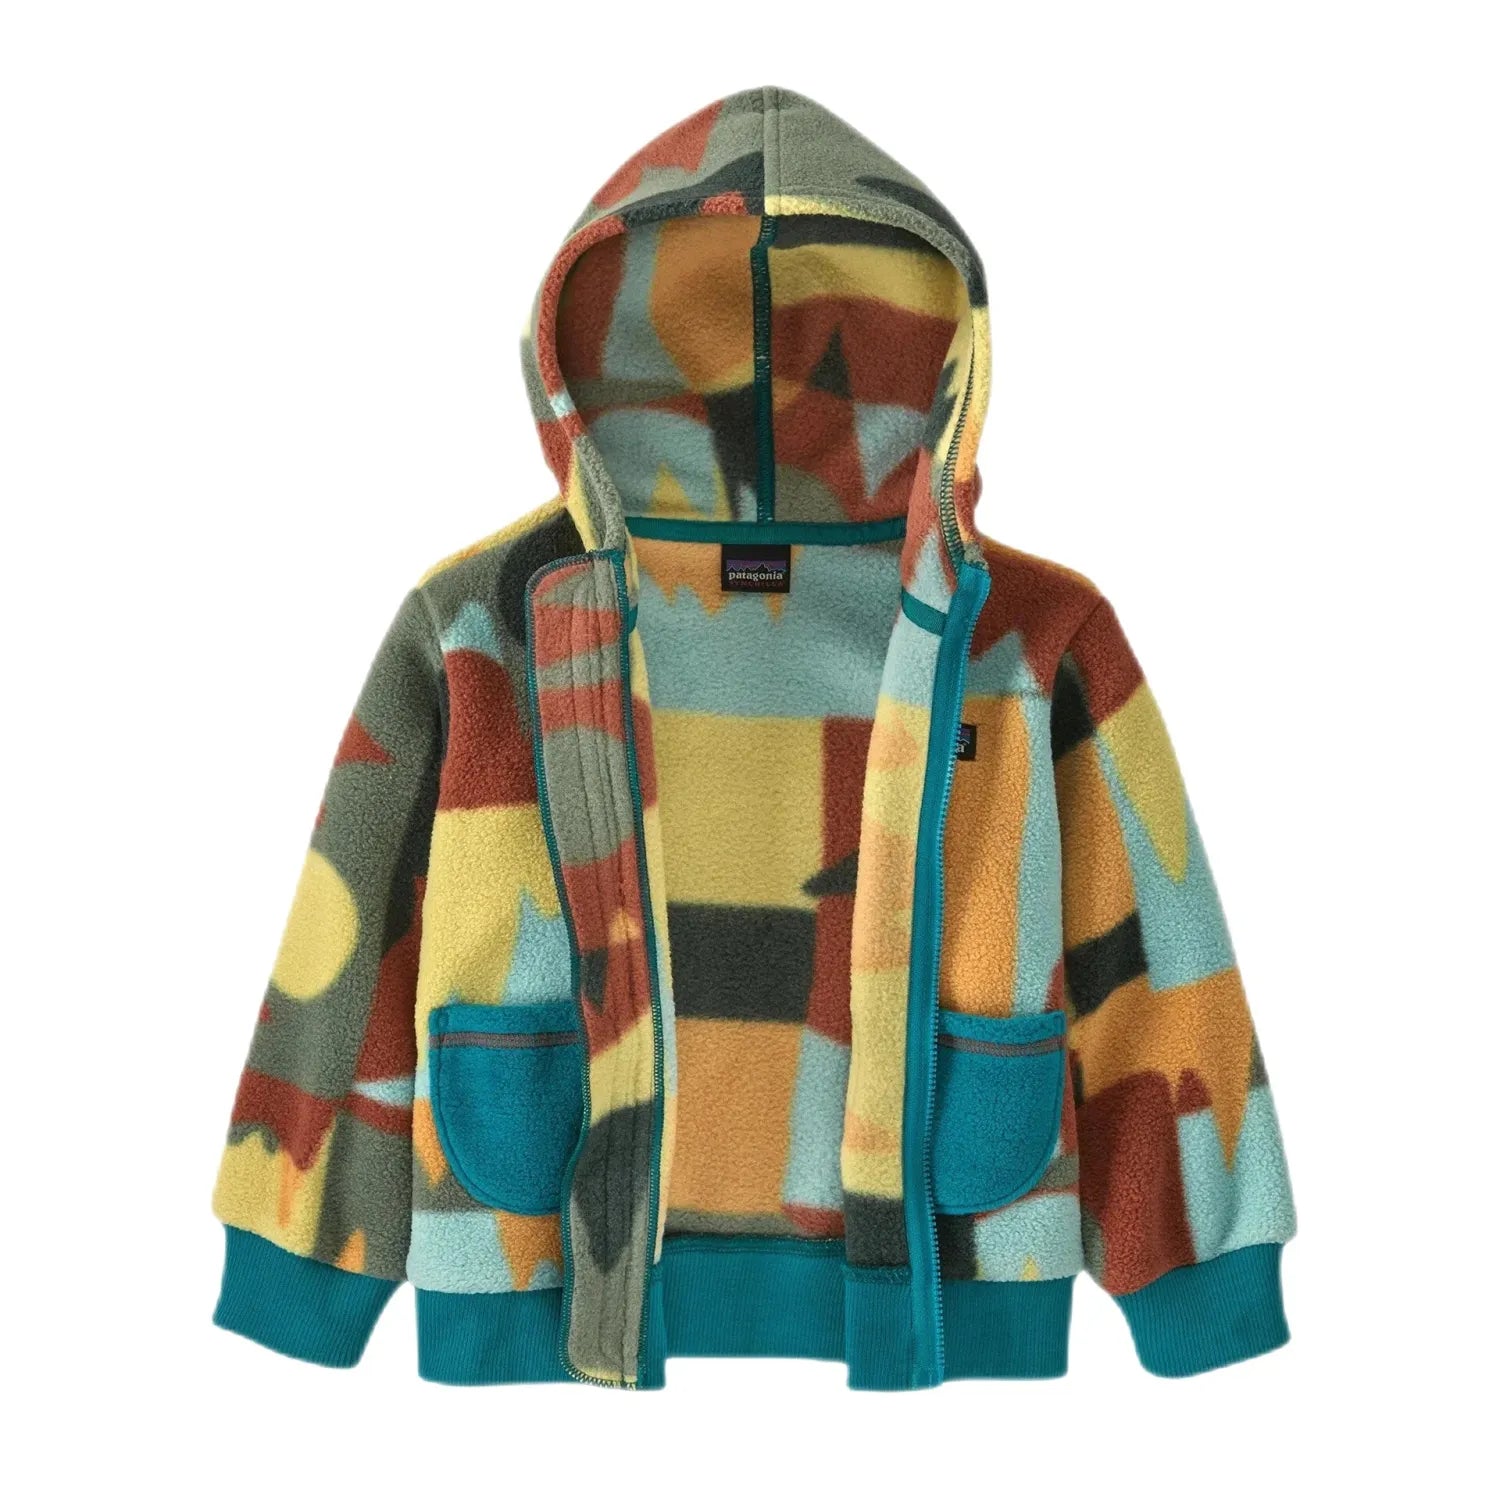 Patagonia Baby Synchilla® Fleece Cardigan shown in the Fronterita: Skiff Blue color option.  Open view